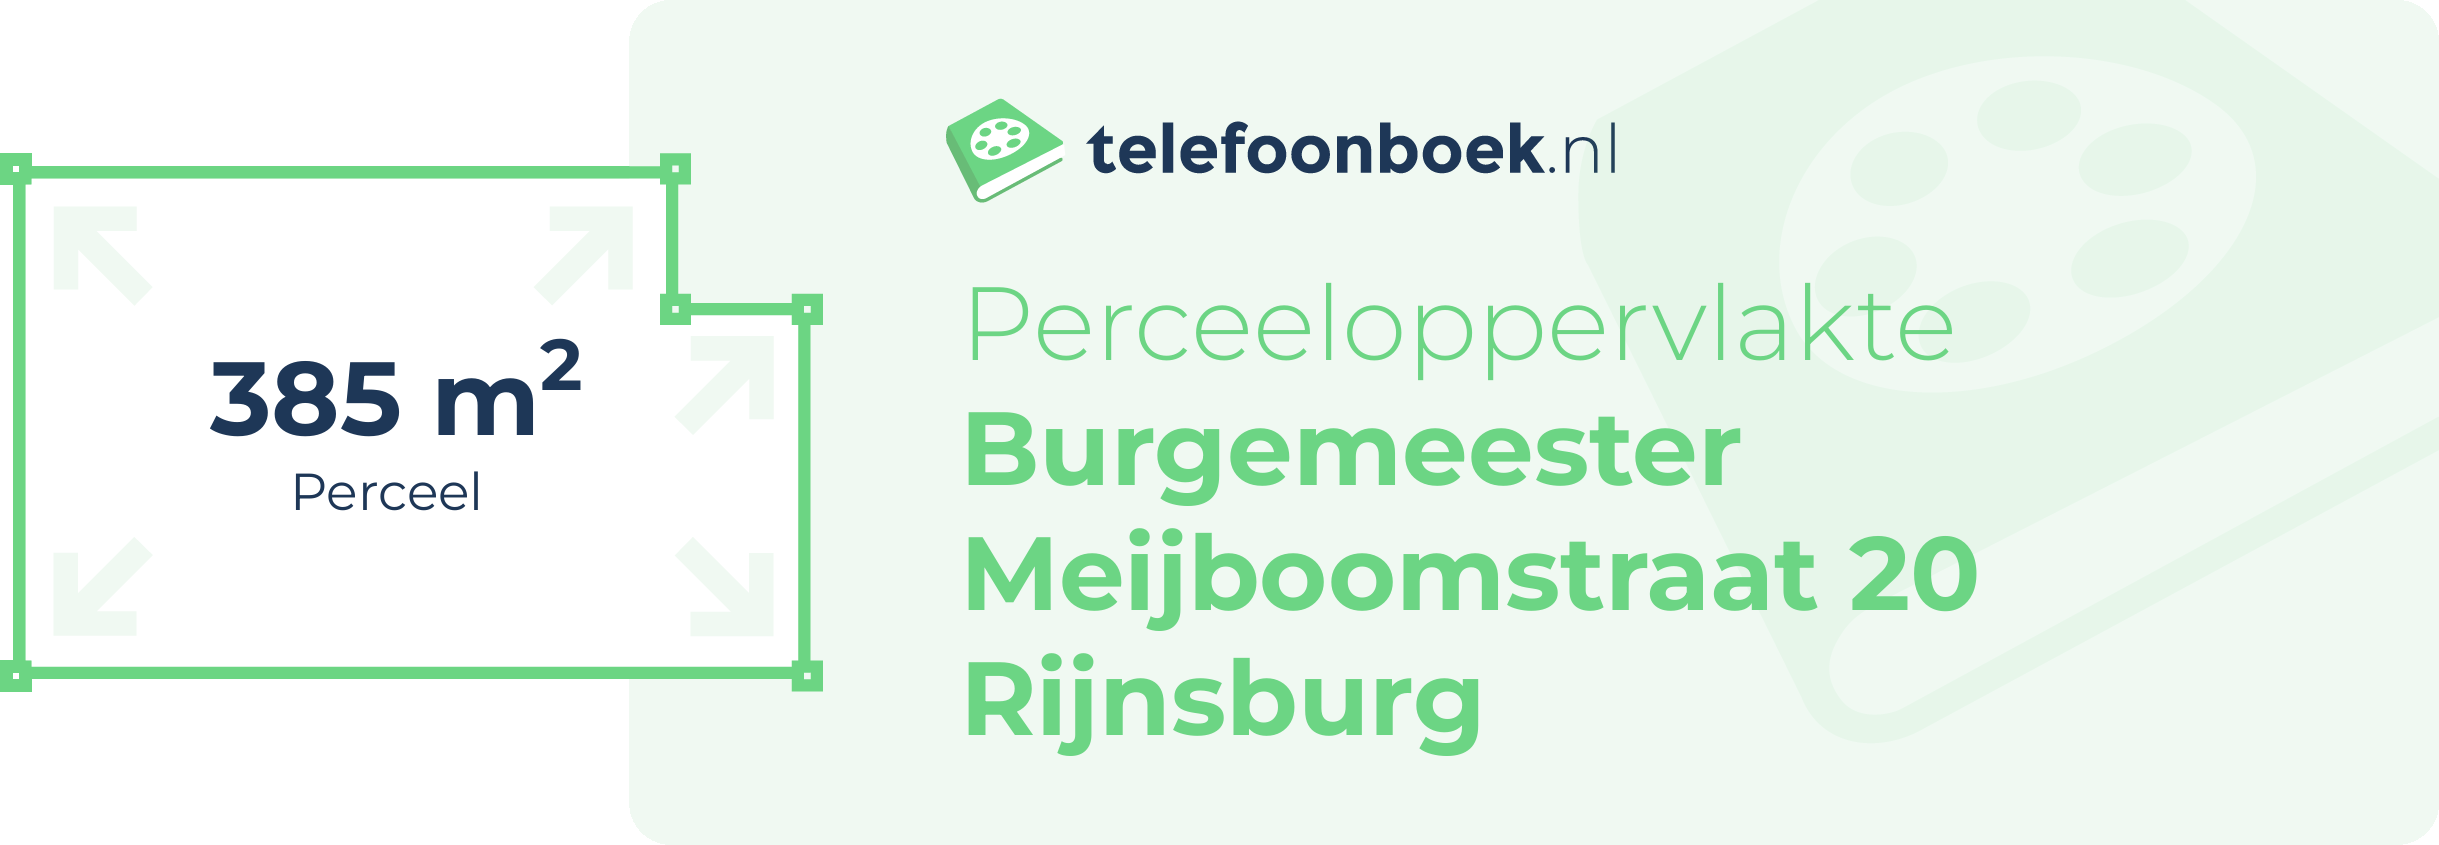 Perceeloppervlakte Burgemeester Meijboomstraat 20 Rijnsburg